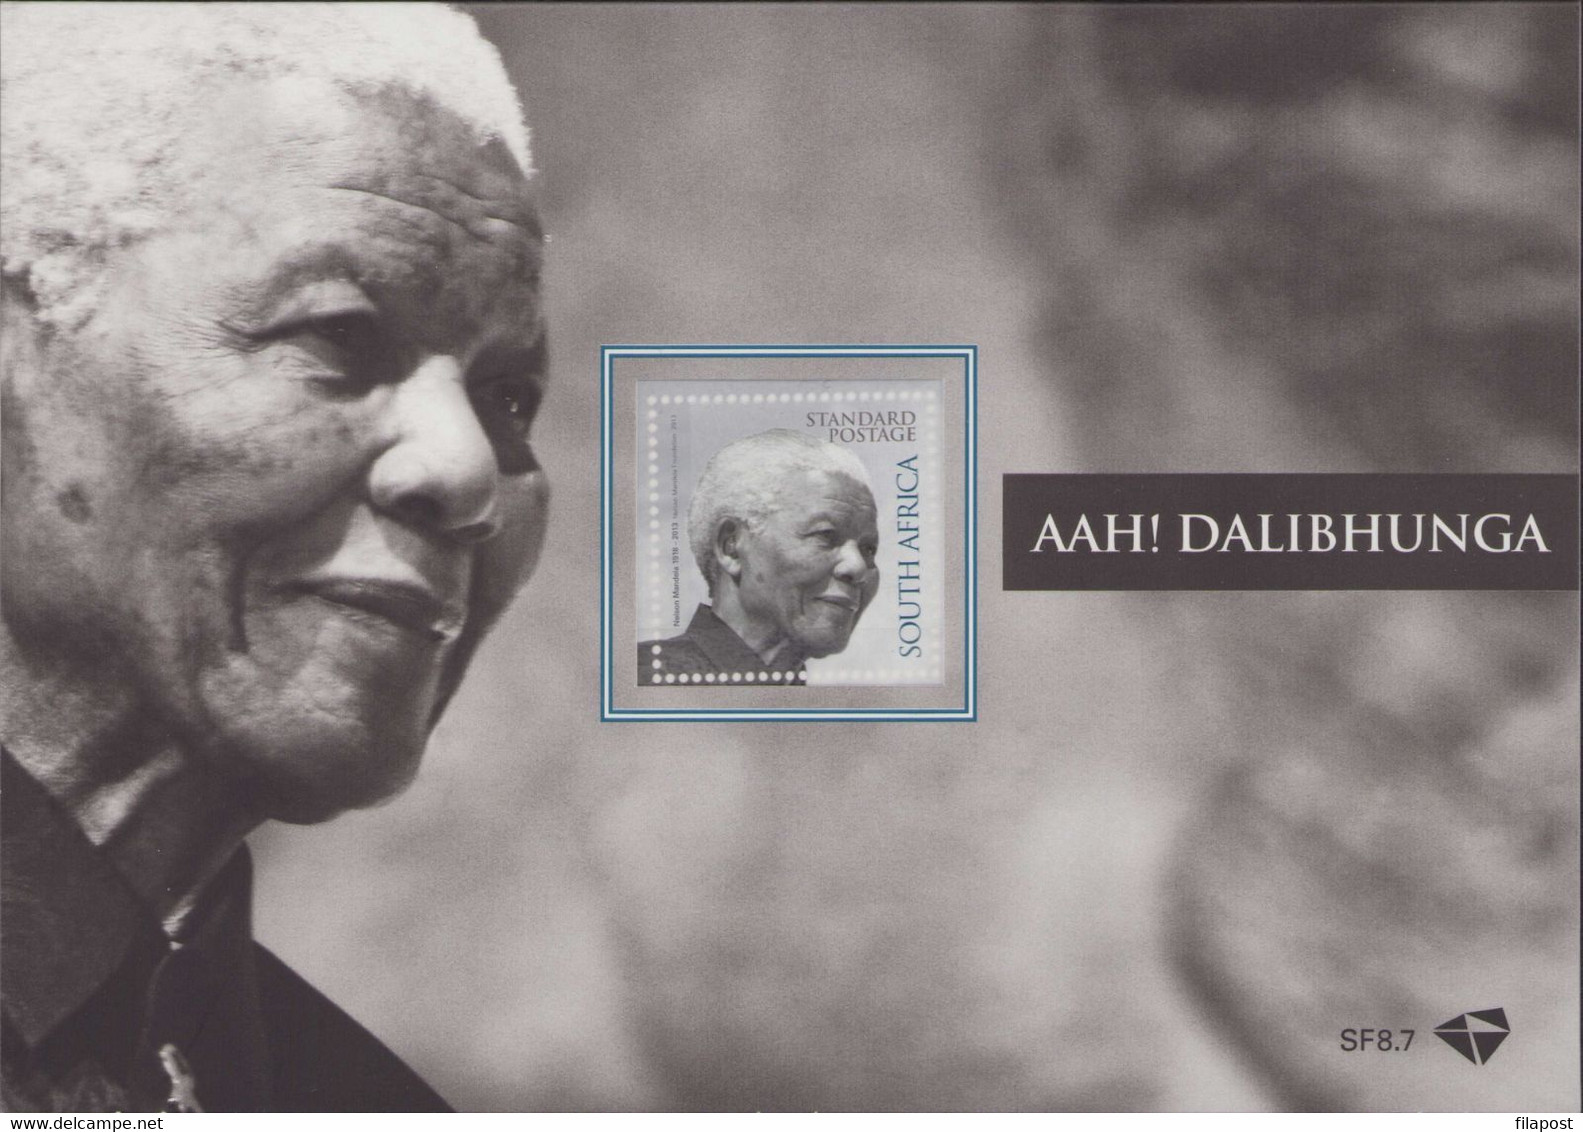 South Africa SA 2014 Nelson Mandela Nobel Peace Prize Laureate, Commemoration Folder With Stamp / Mini Sheet MNH** P59 - Libretti